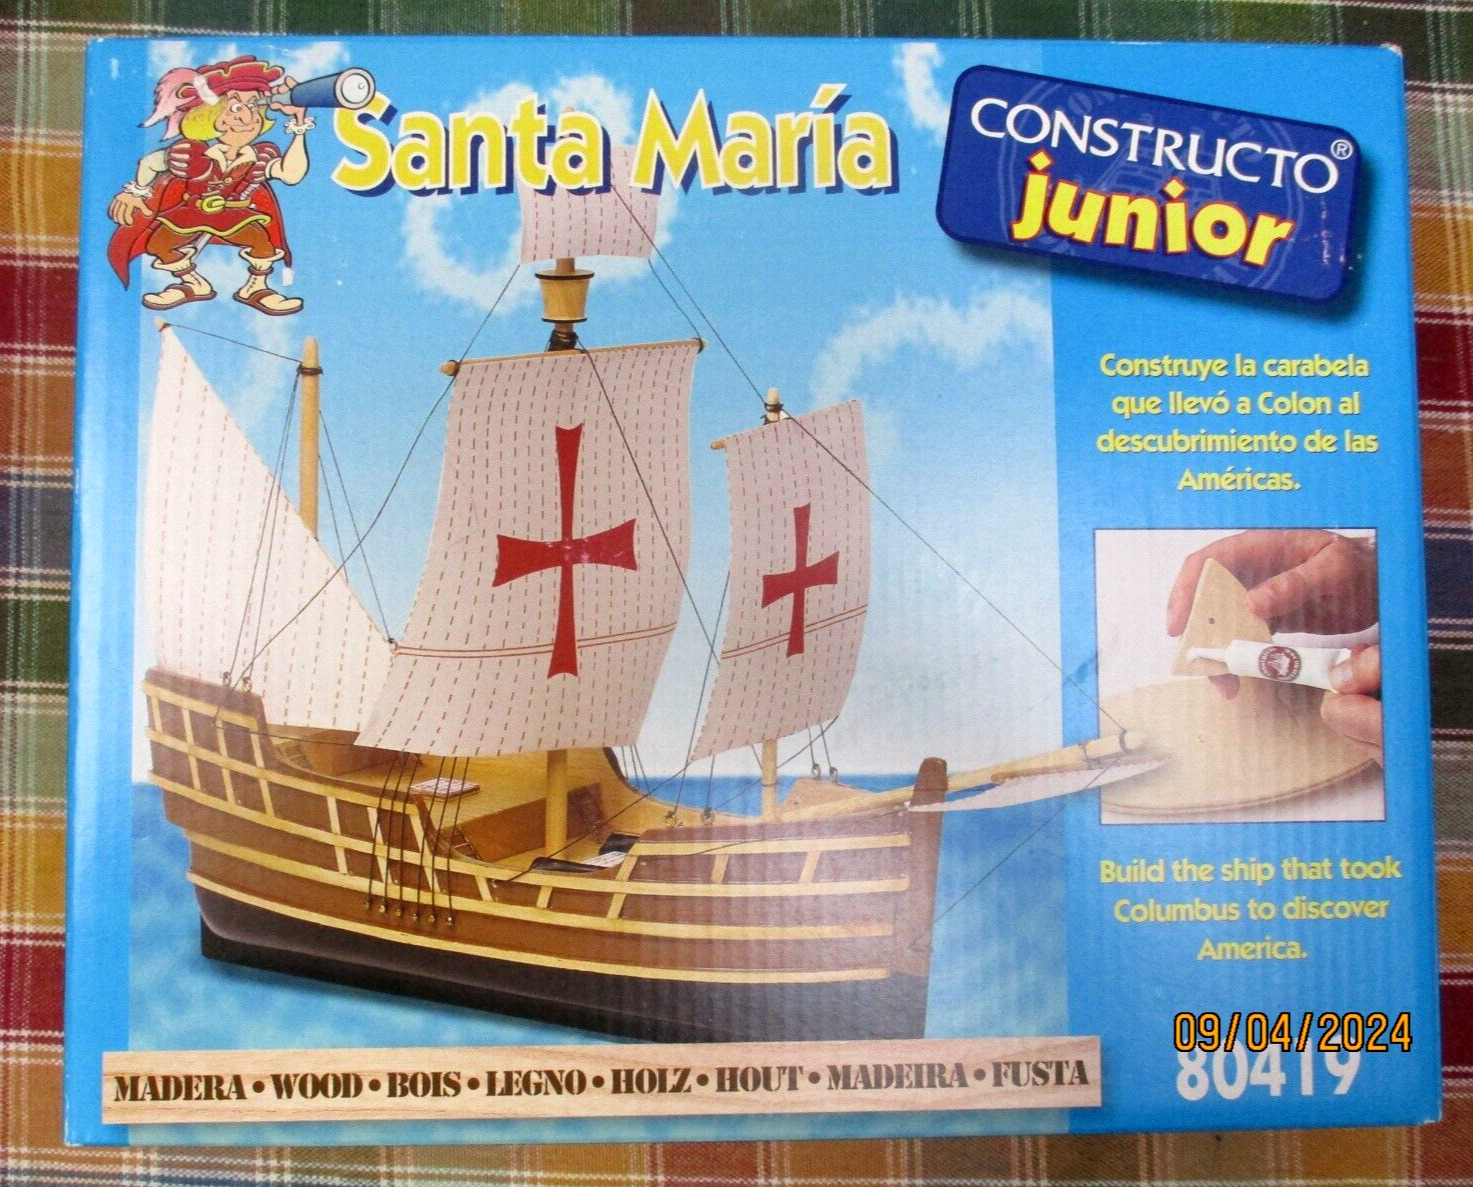 Constructo Junior SANTA MARIA Wood Ship Model 80419                        #7008